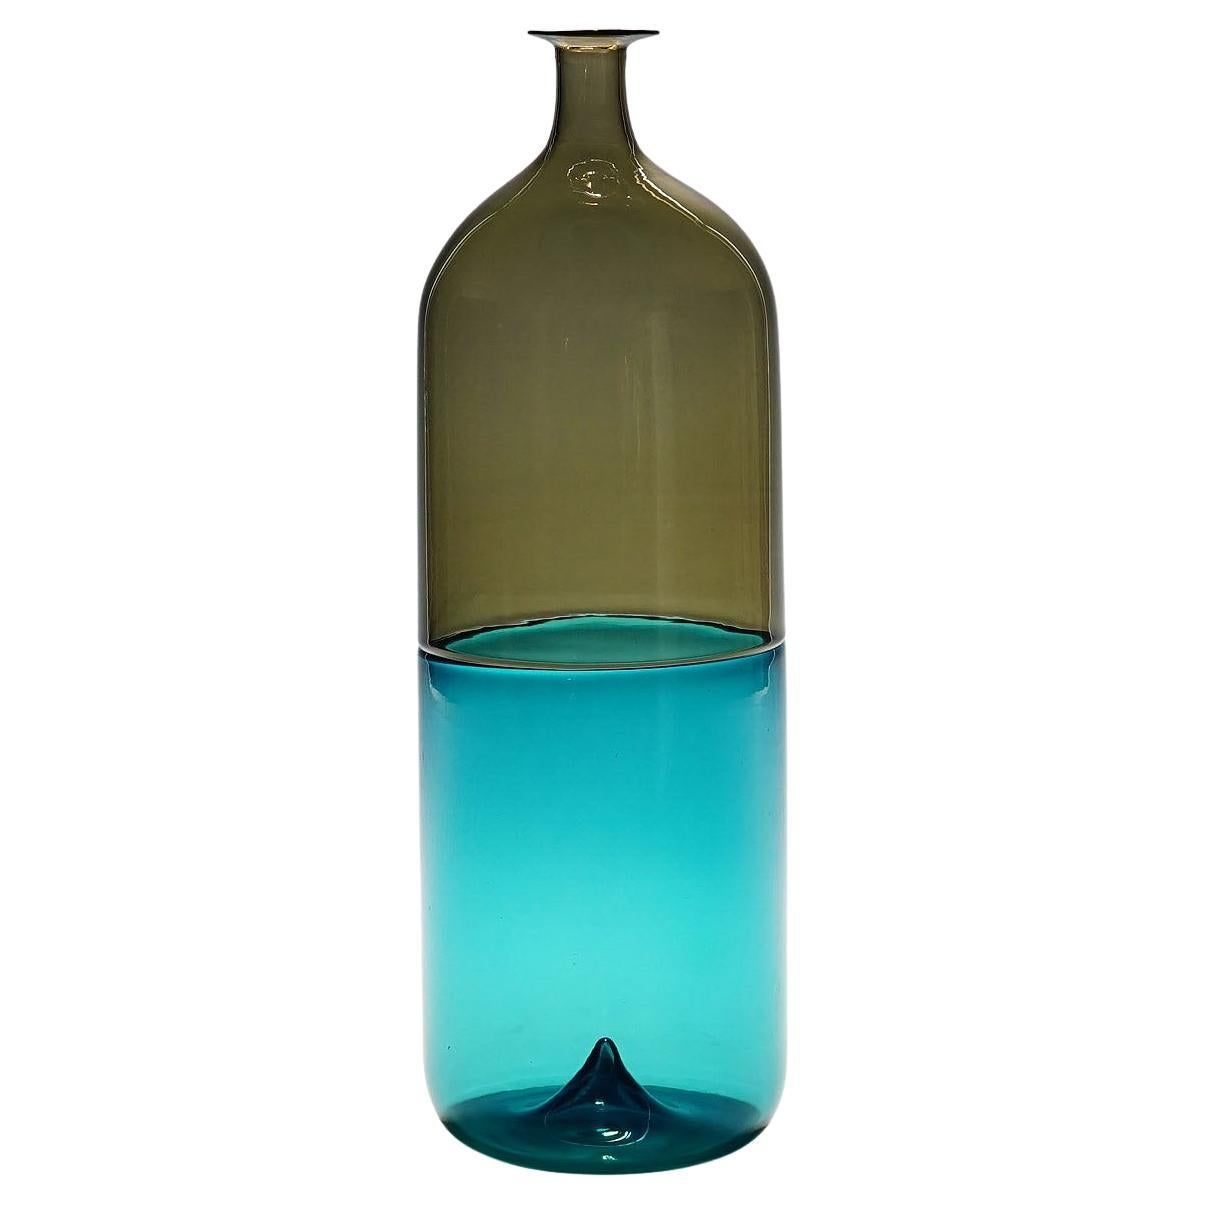 Venini - 2,557 For Sale at 1stdibs | vennini, venini glass chandeliers,  venini light